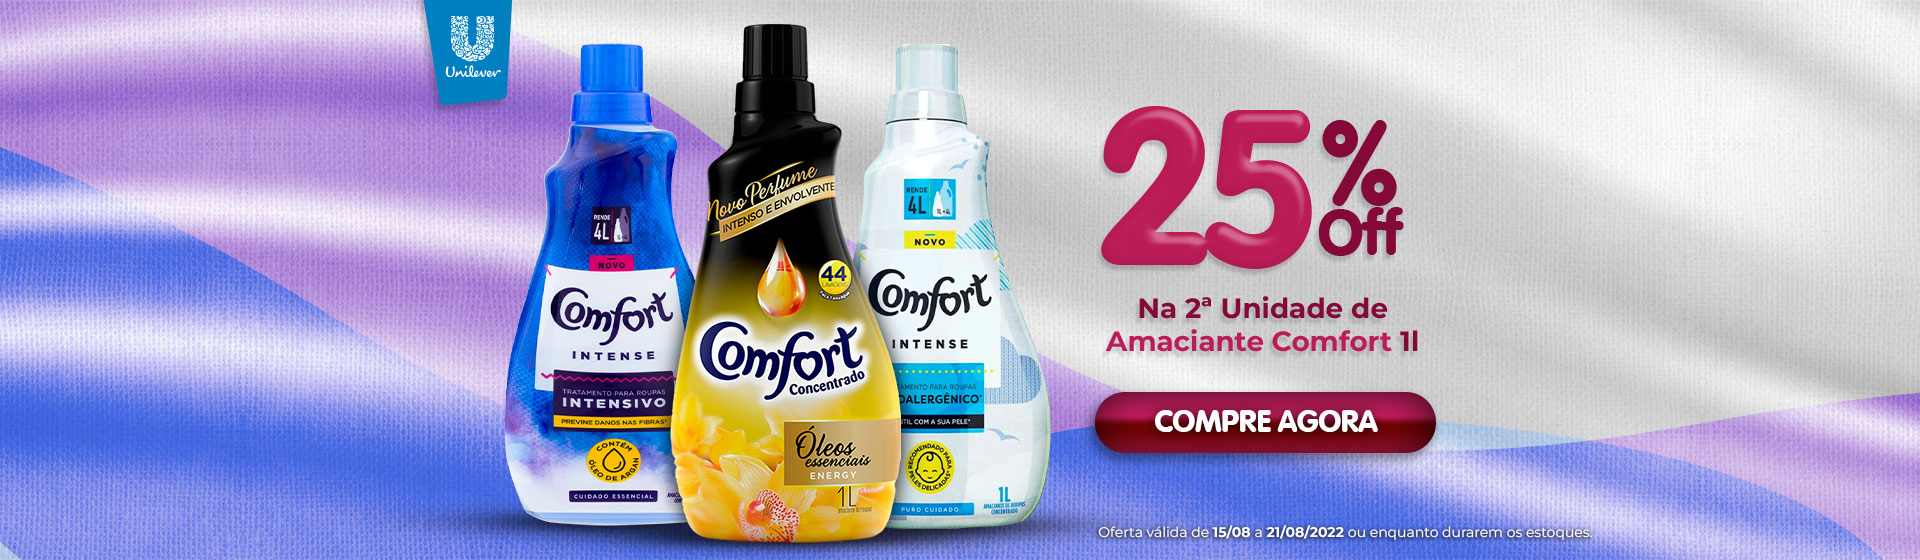 Unilever - 25% na 2ª unidade - Comfort 1L - 15/08 a 21/08